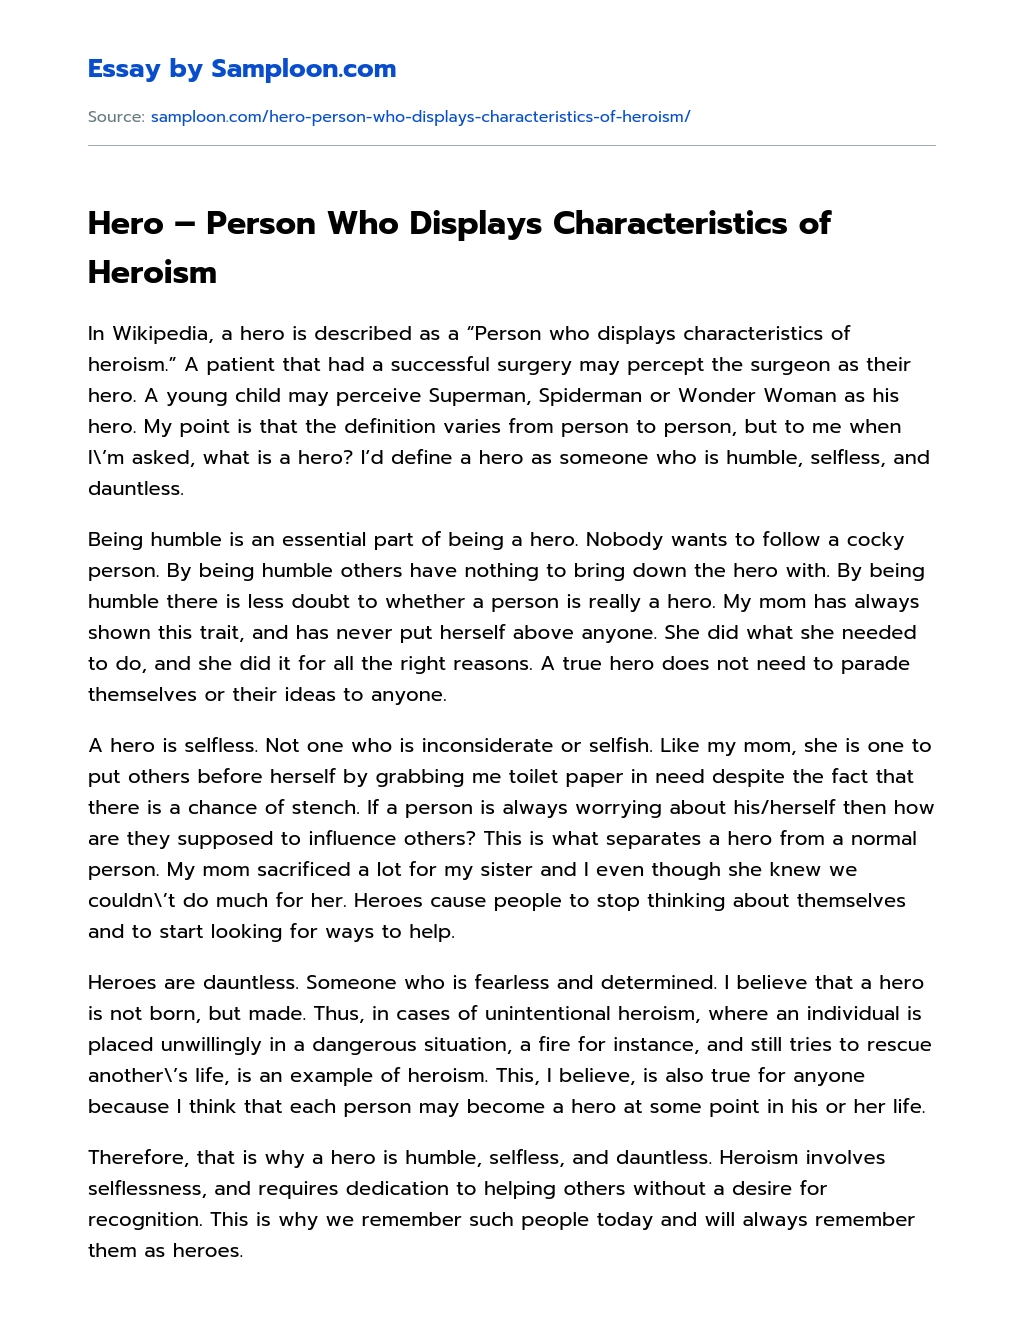 Hero – Person Who Displays Characteristics of Heroism essay